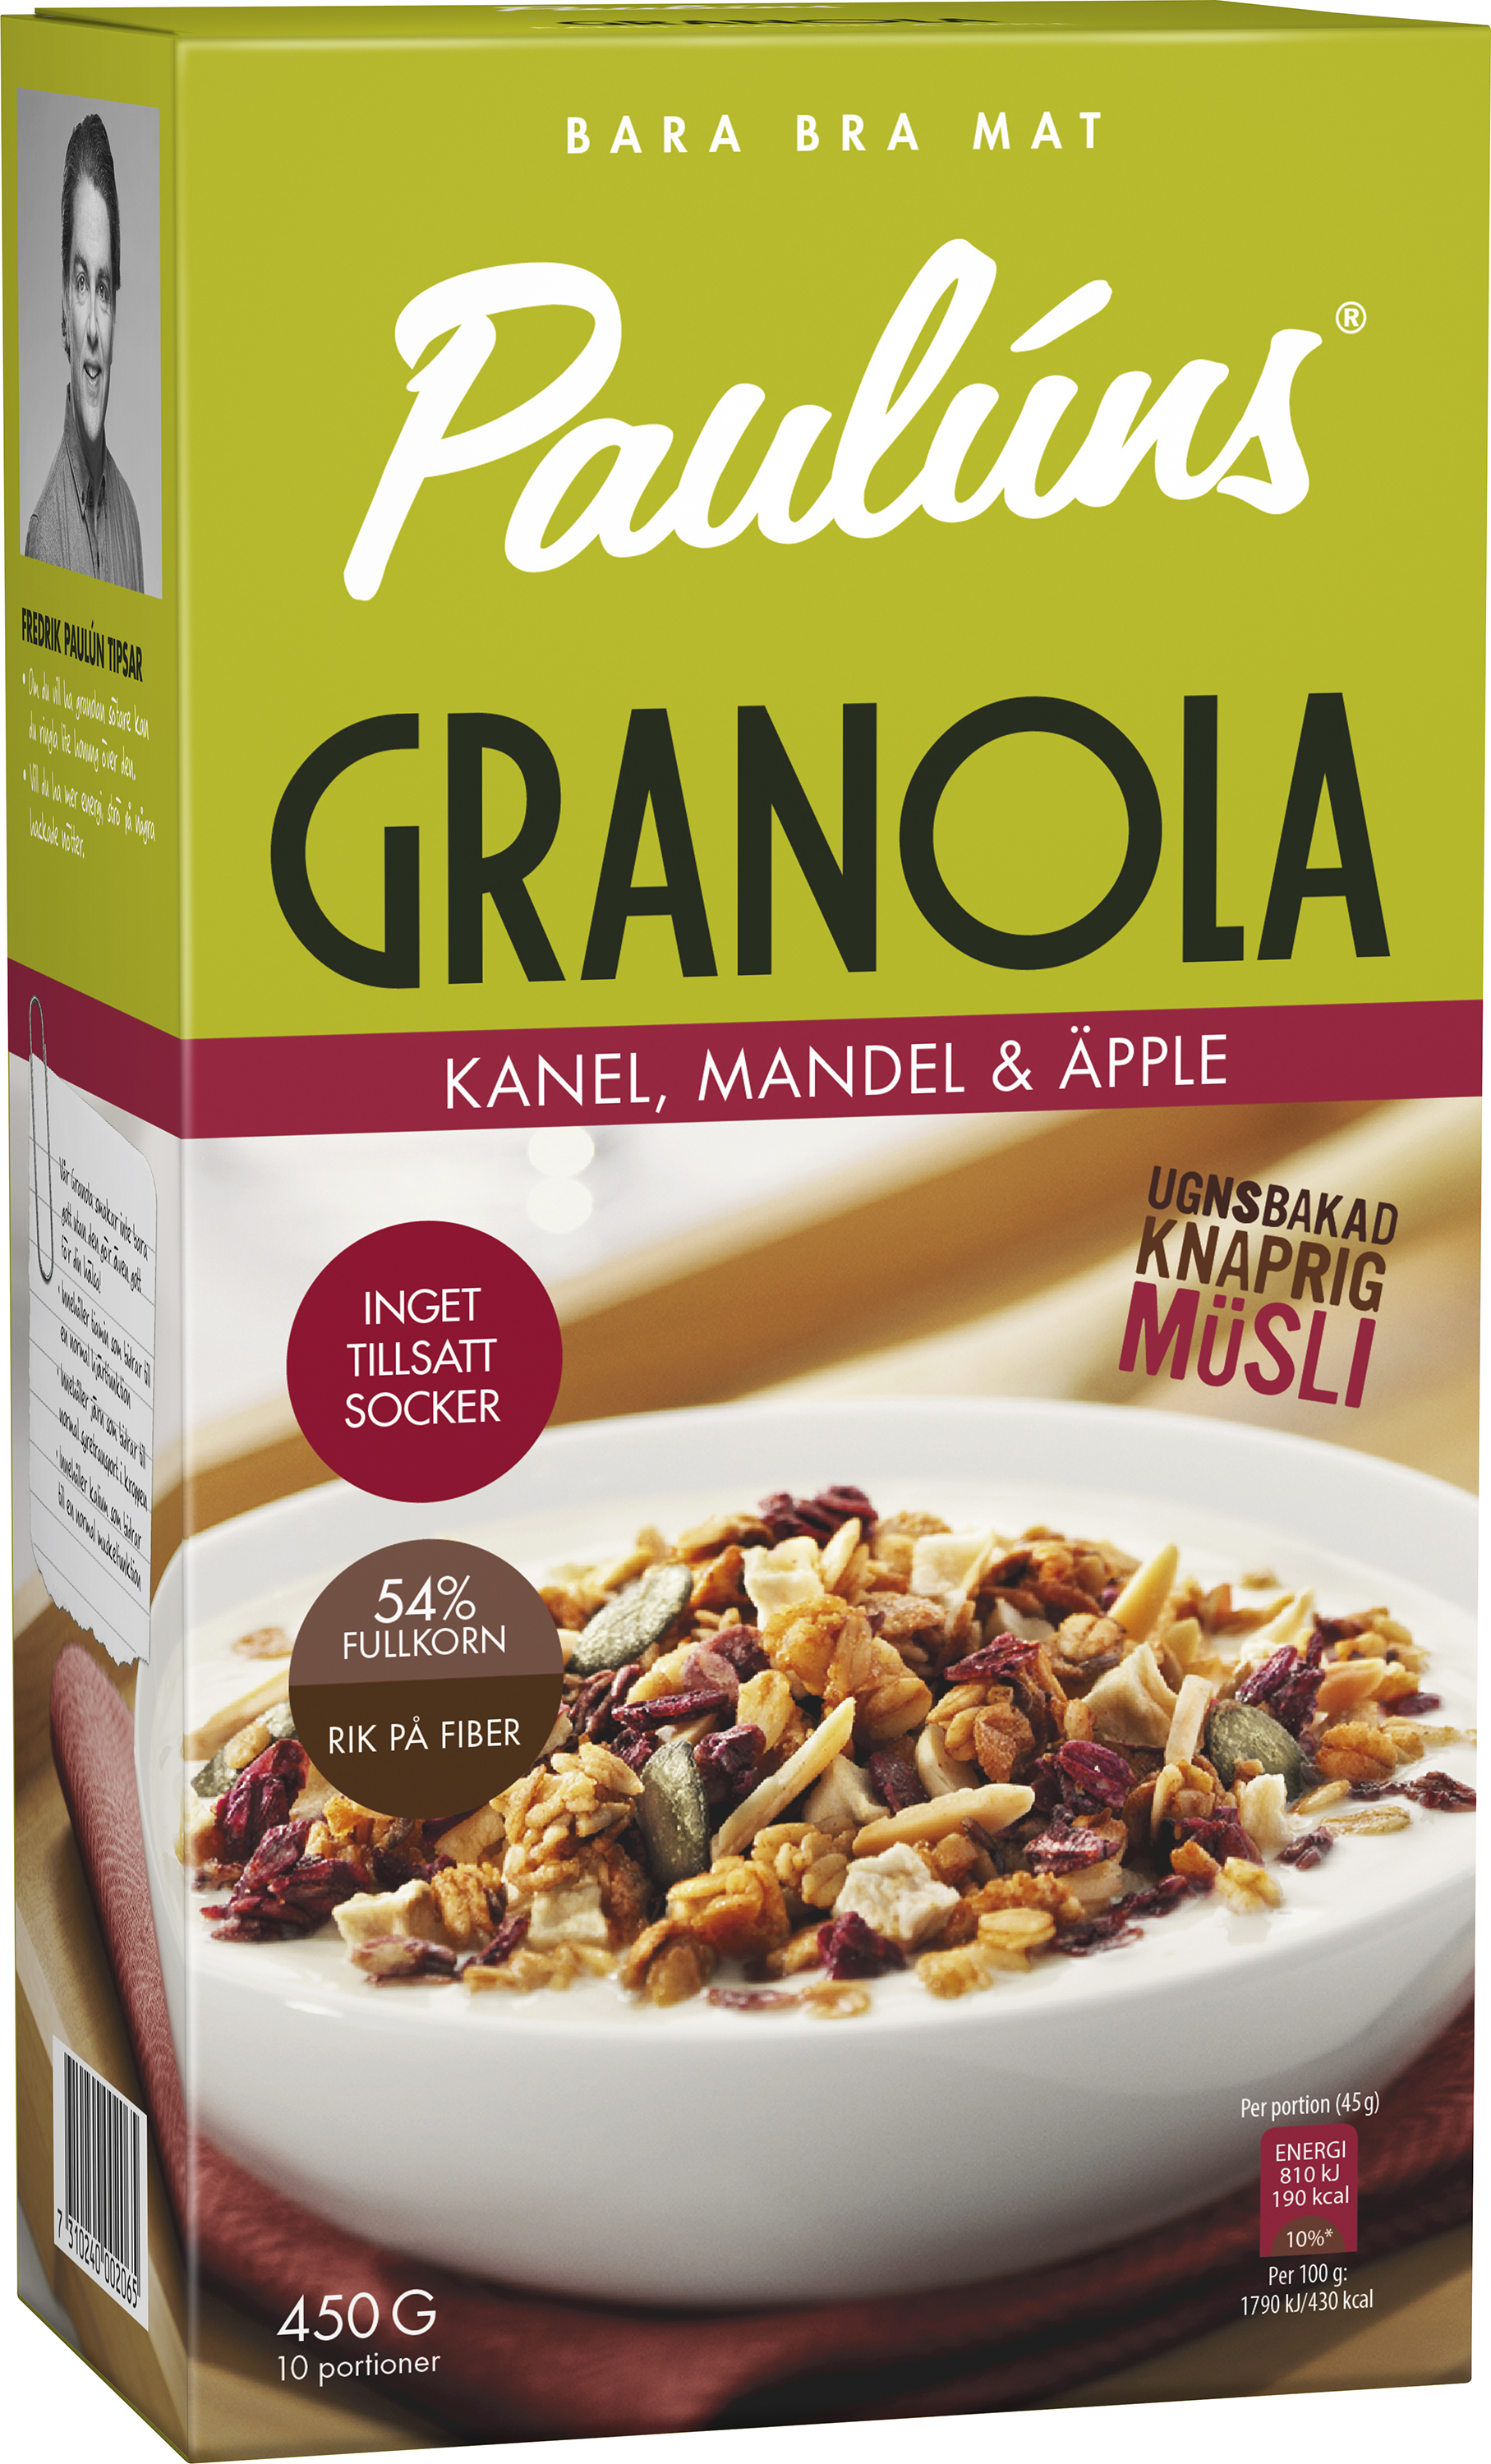 Paulúns Granola Kanel Mandel Äpple 450 g